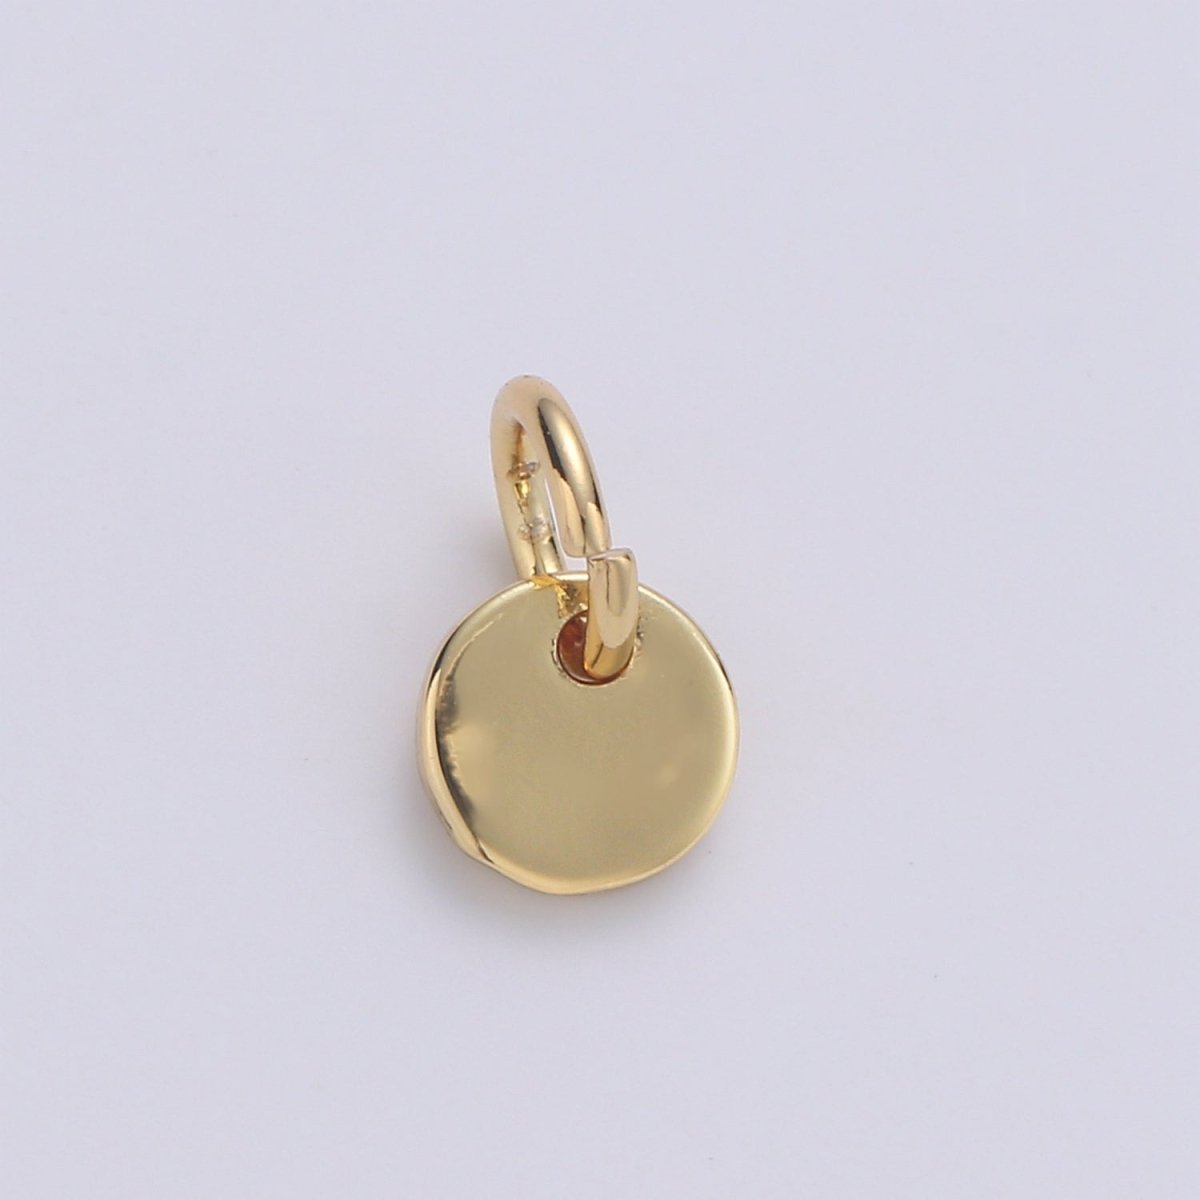 24k Gold Filled Circular charm DIY Earring Jewelry, Earring & Pendant Supply DIY Findings, Wristlet Charm, D-294-D-297 - DLUXCA